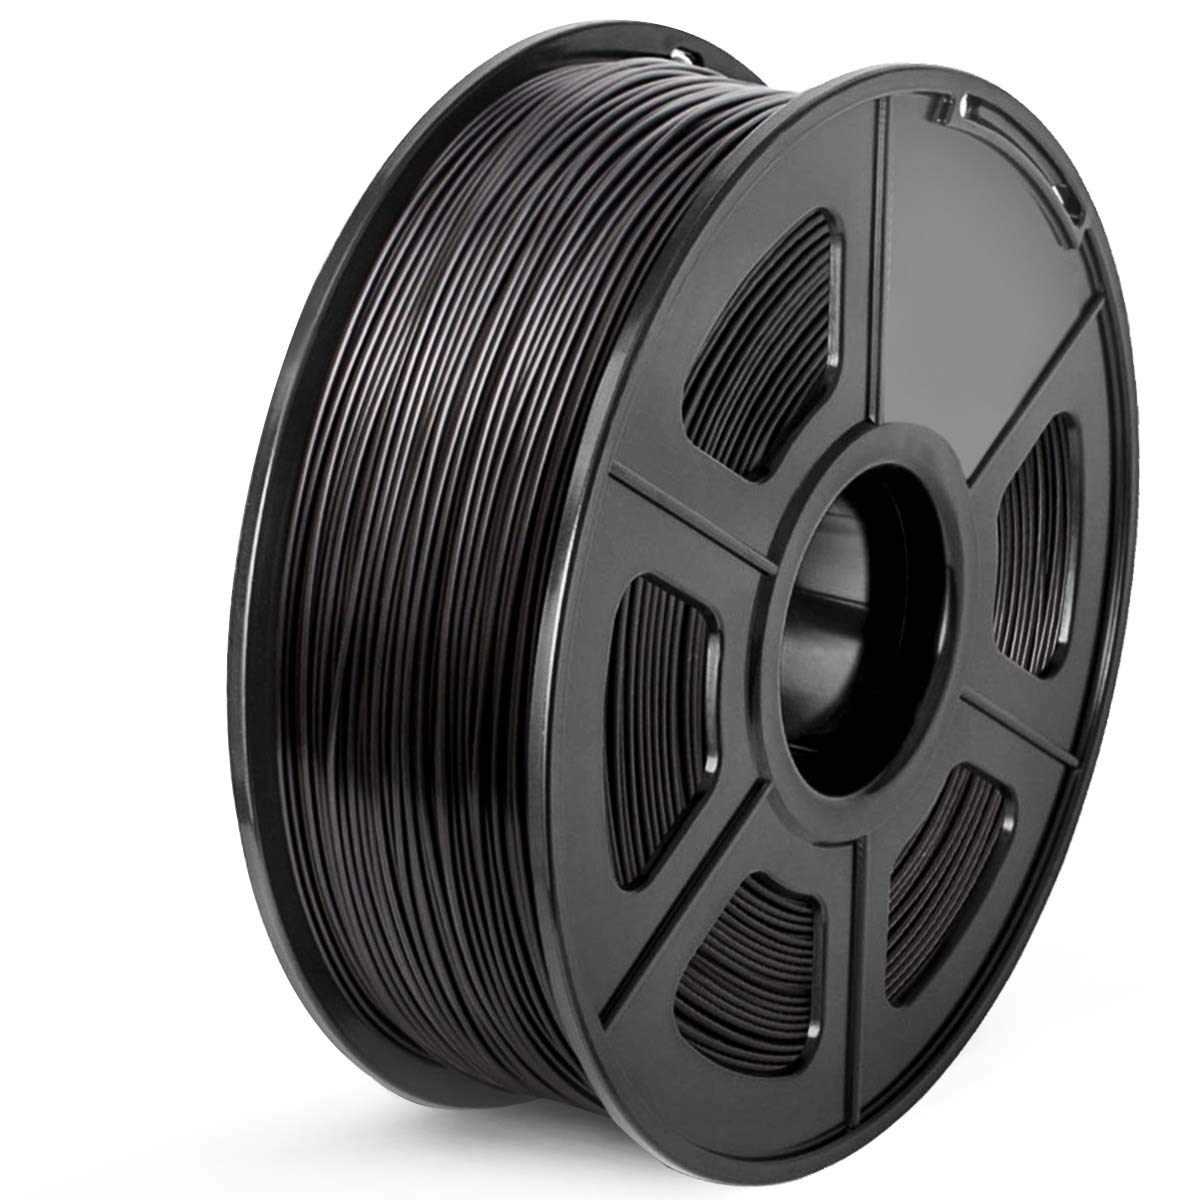 Black ABS 3D Printer Filament 1.75mm 1Kg Spool (2.2lbs), Dimensional Accuracy of +/- 0.02mm